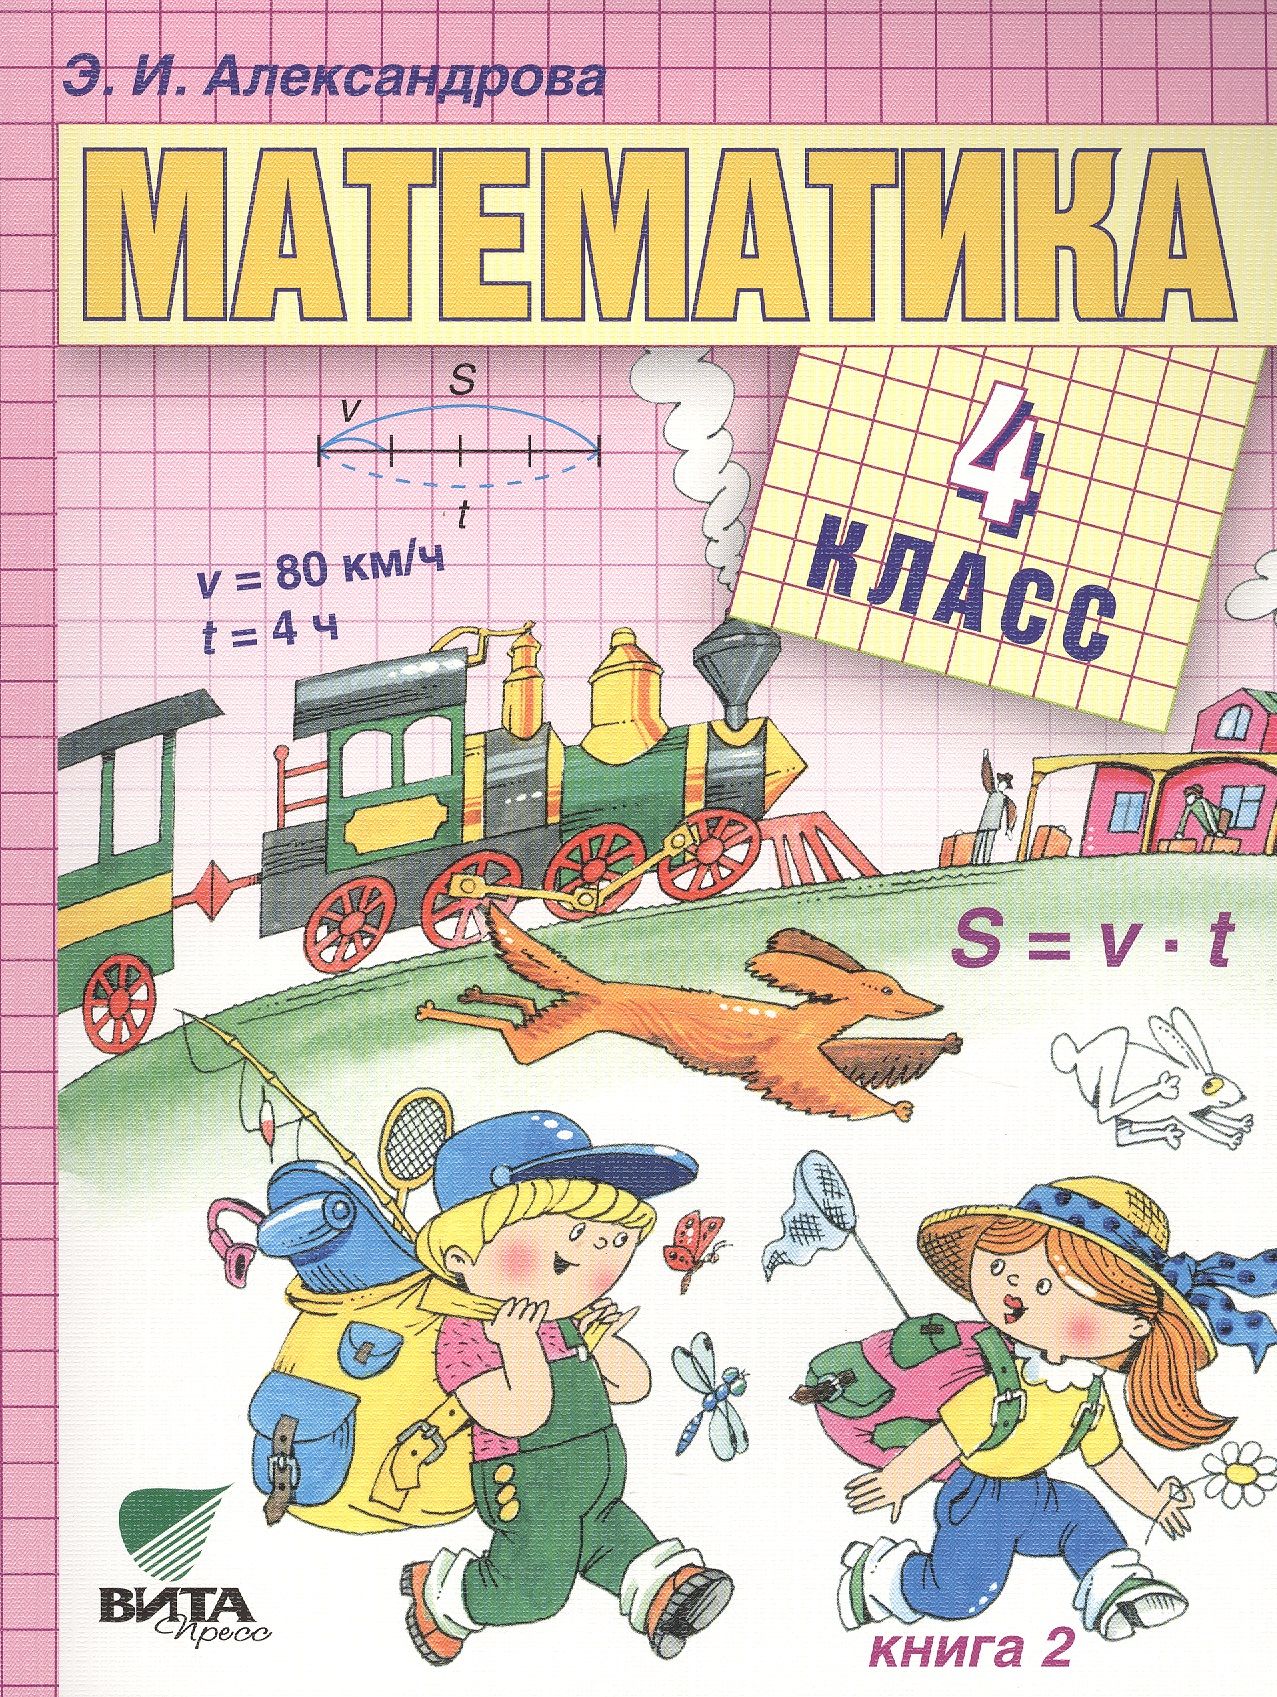 Матиматика учебник